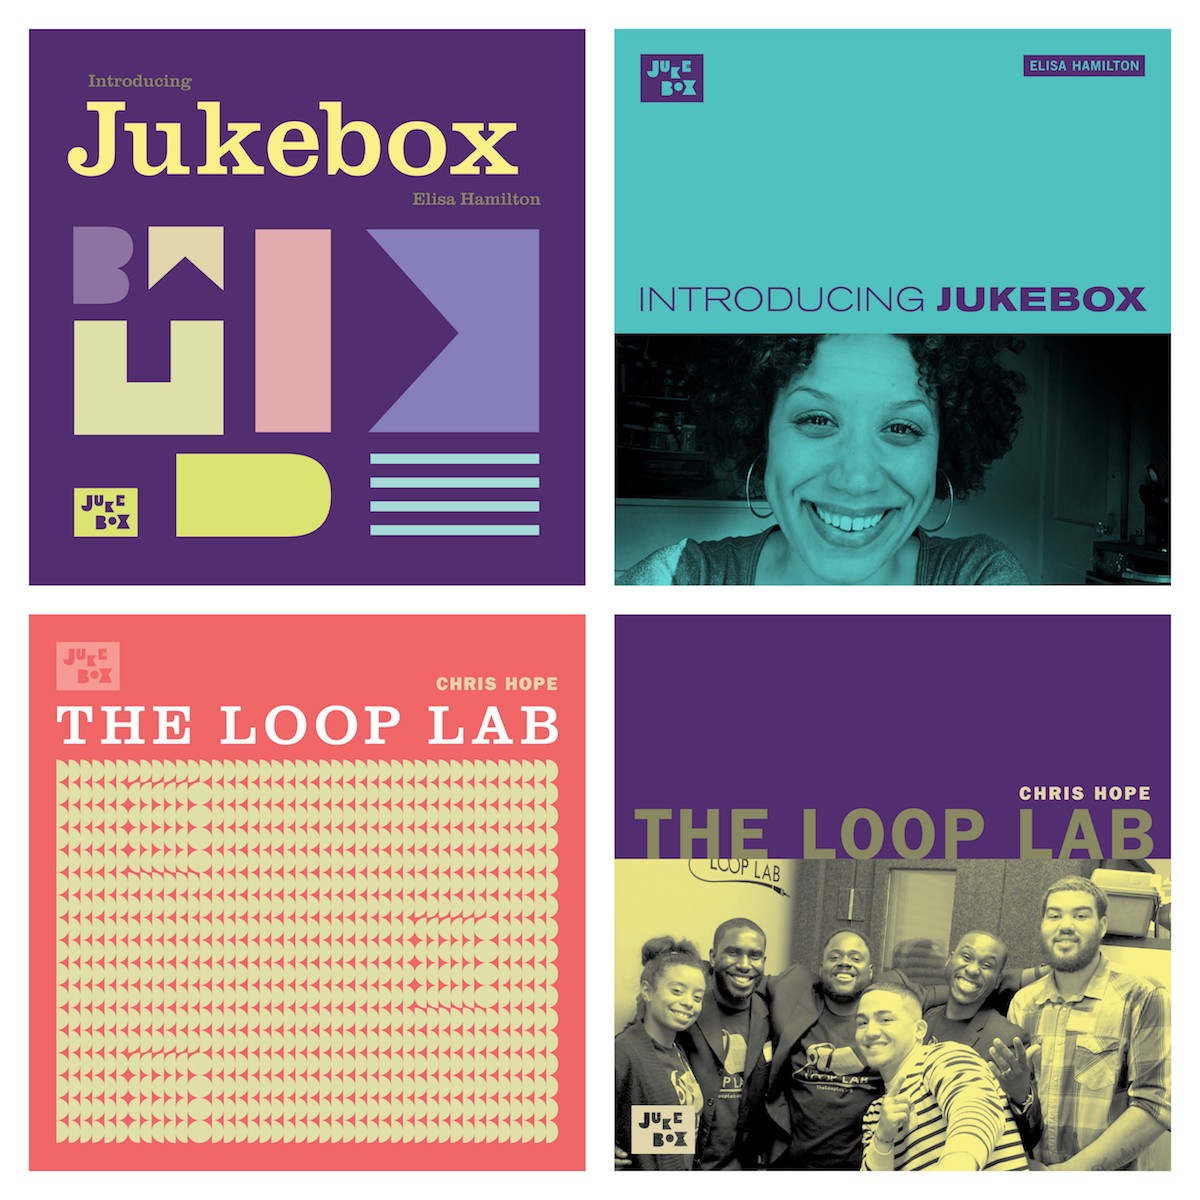 Jukebox Album Art, created in
collaboration with GoodGood
Design | AVIXA